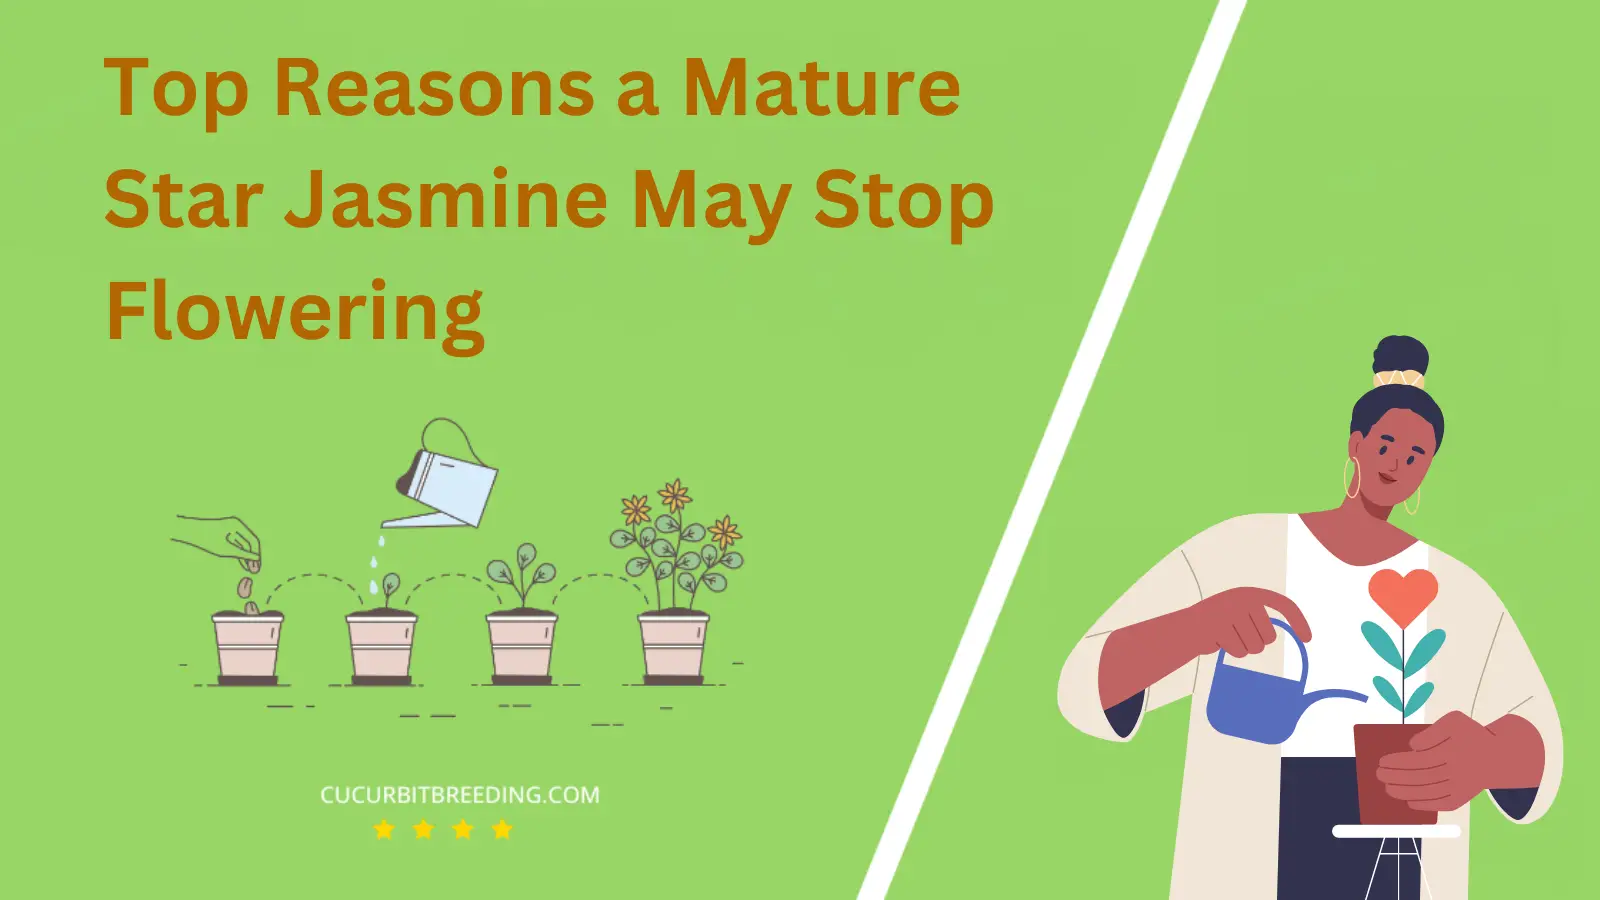 Top Reasons a Mature Star Jasmine May Stop Flowering